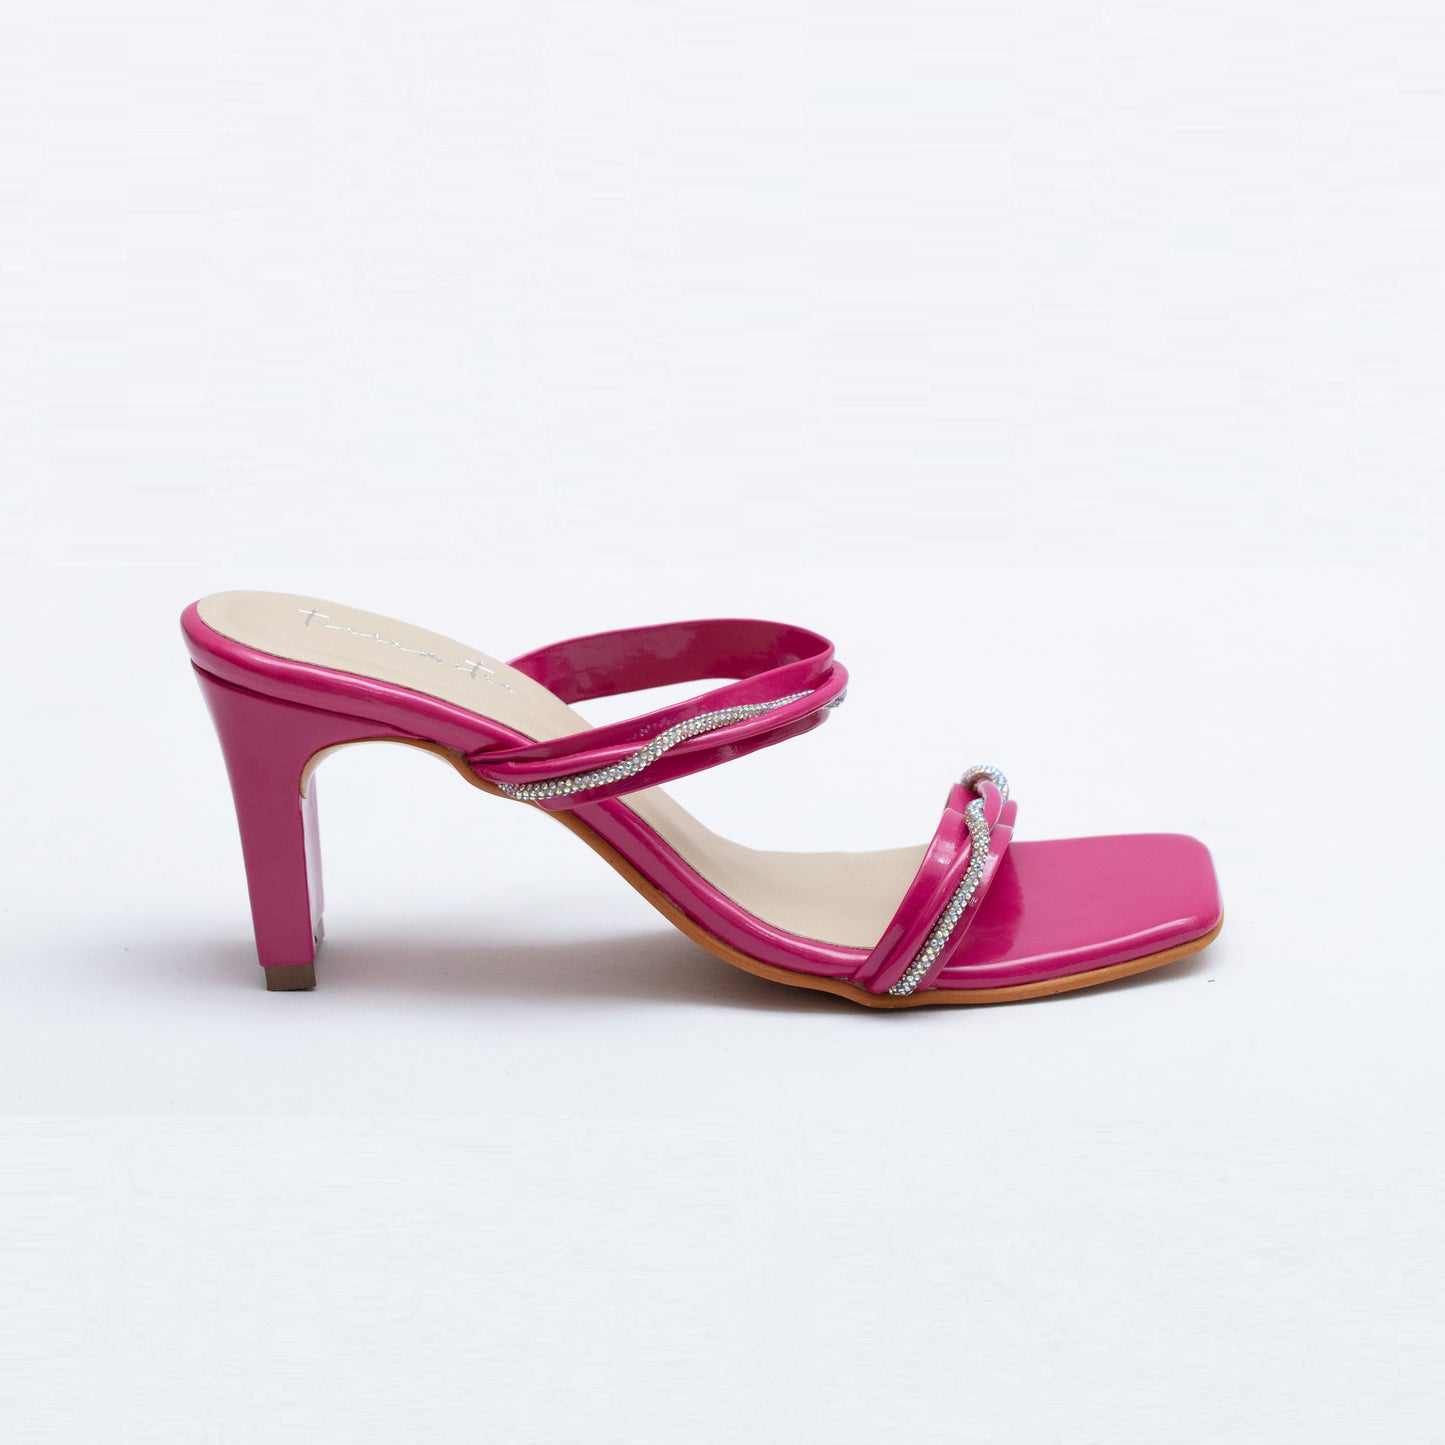 Electric pink heels